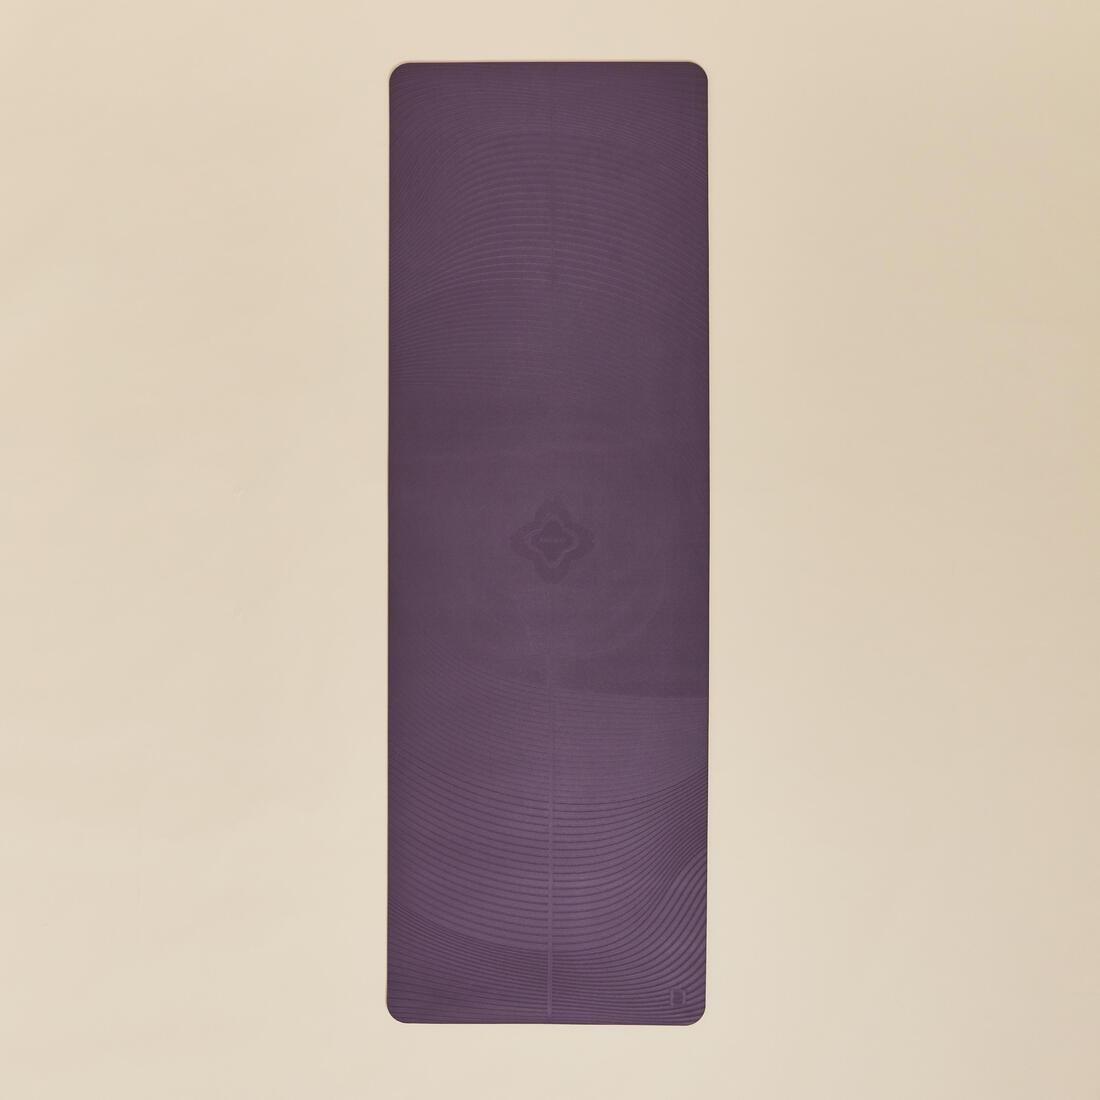 KIMJALY - Light Yoga Mat - 185 Cm X 61 Cm X 5 Mm, Purple